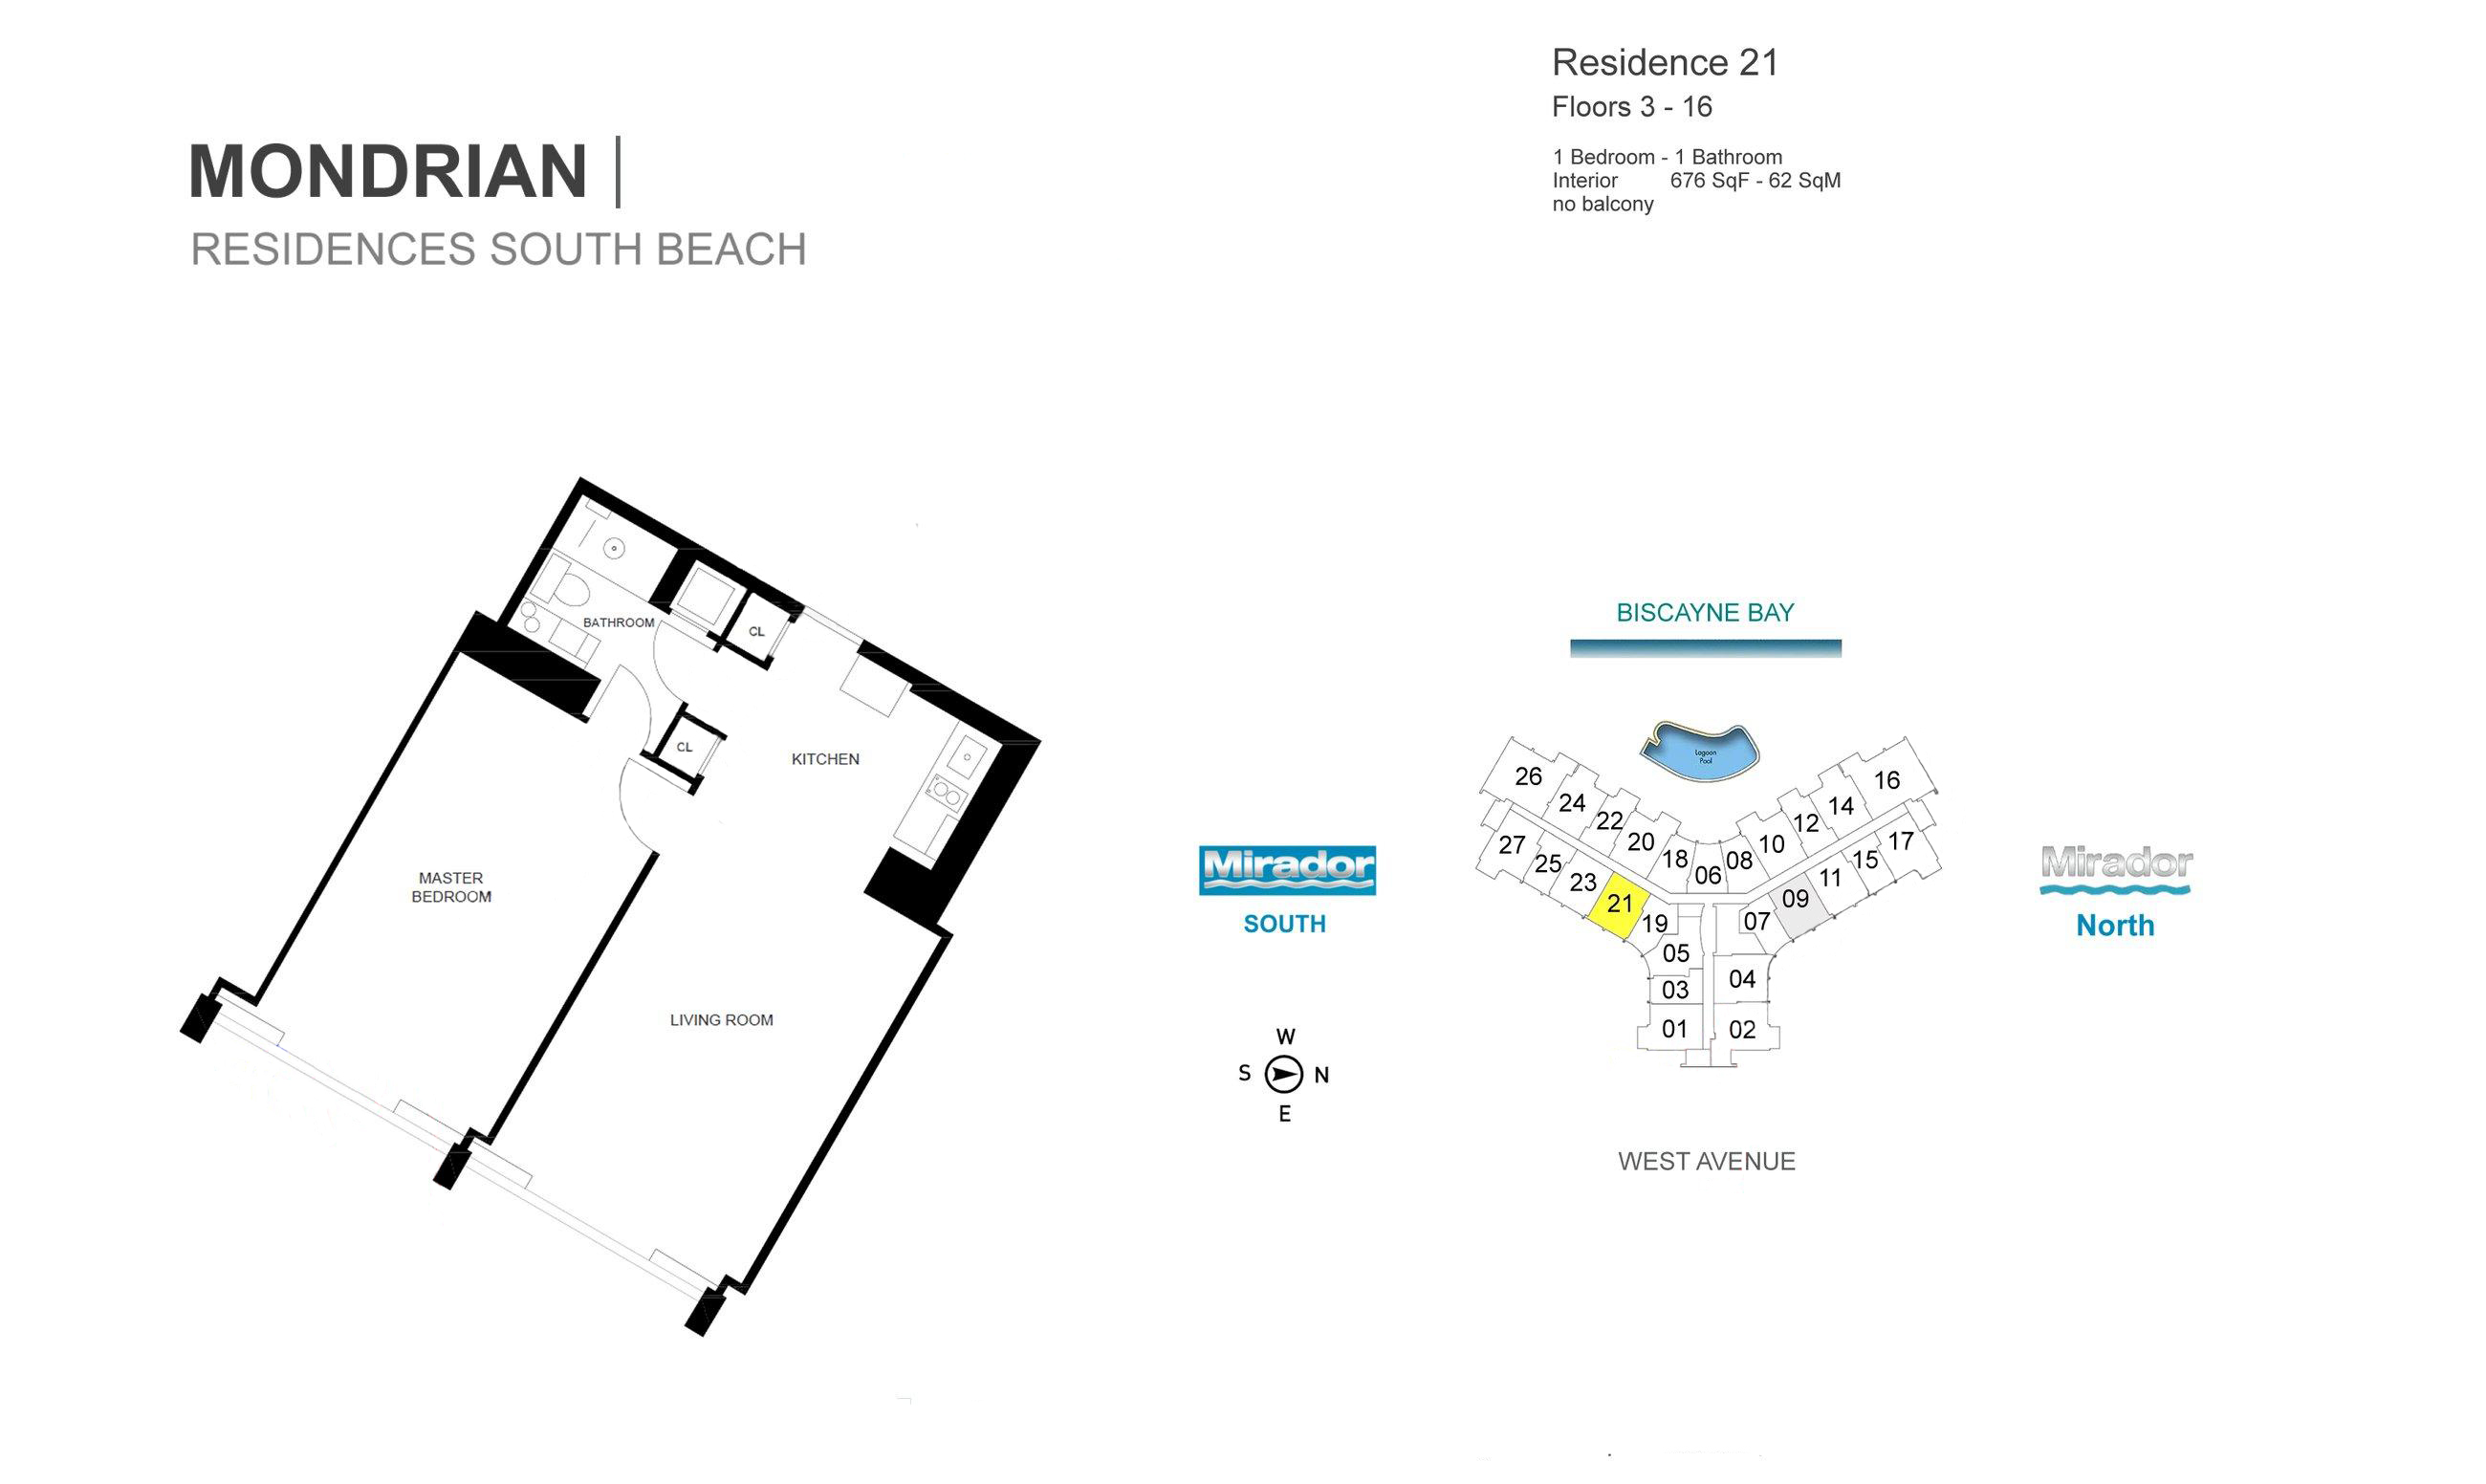 Mondrian South Beach Residence 21